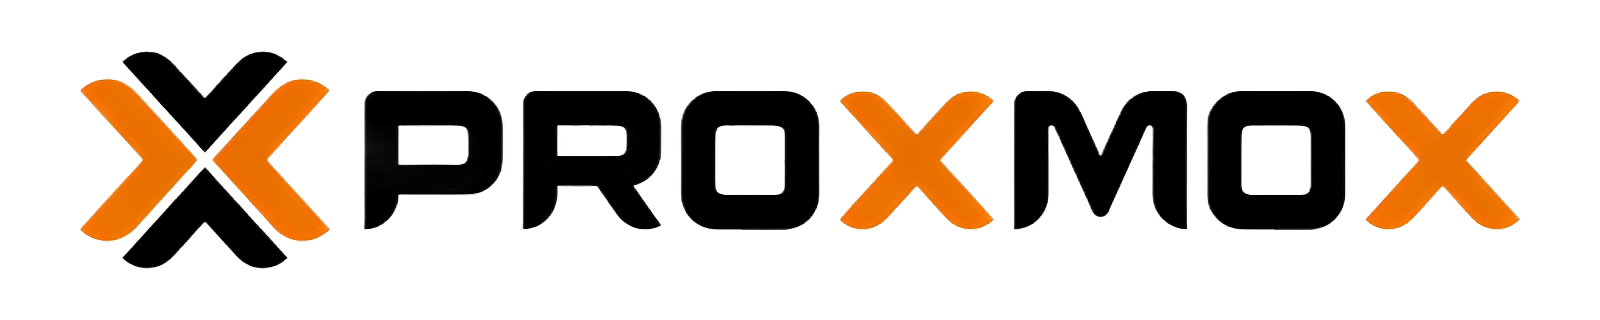 proxmox.png